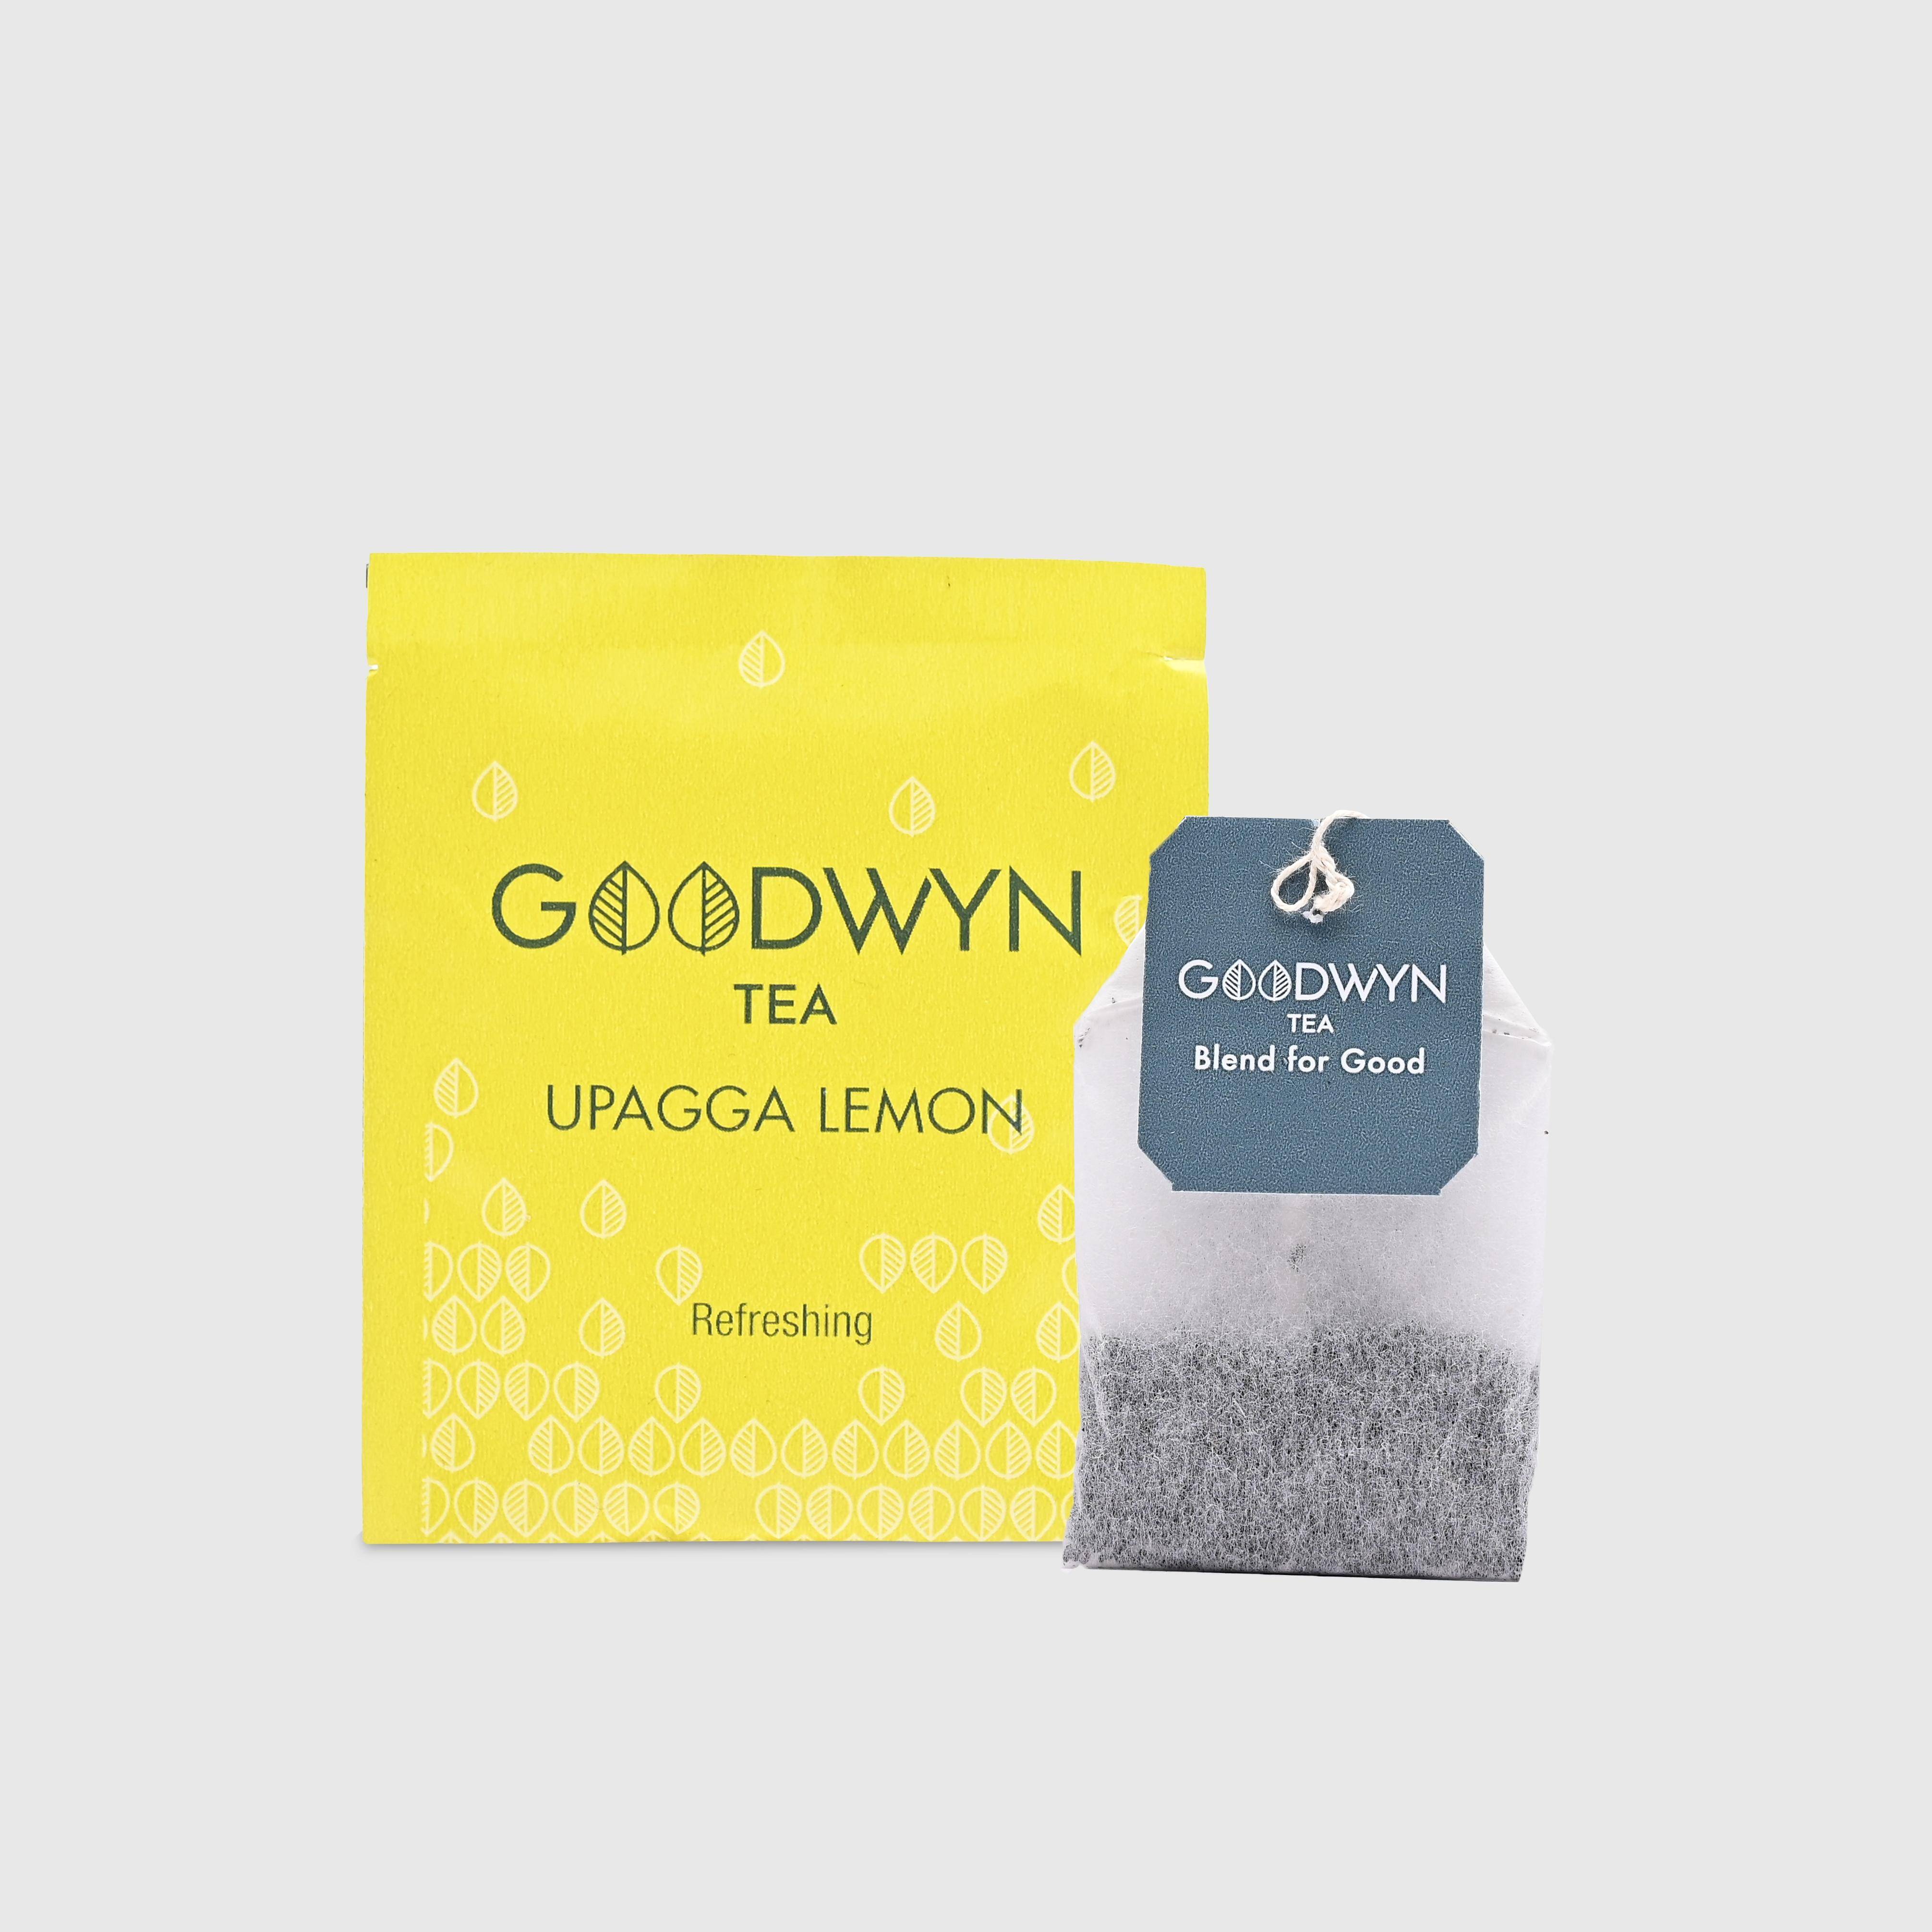 Goodwyn Lemon Enveloped Tea Bags 100s